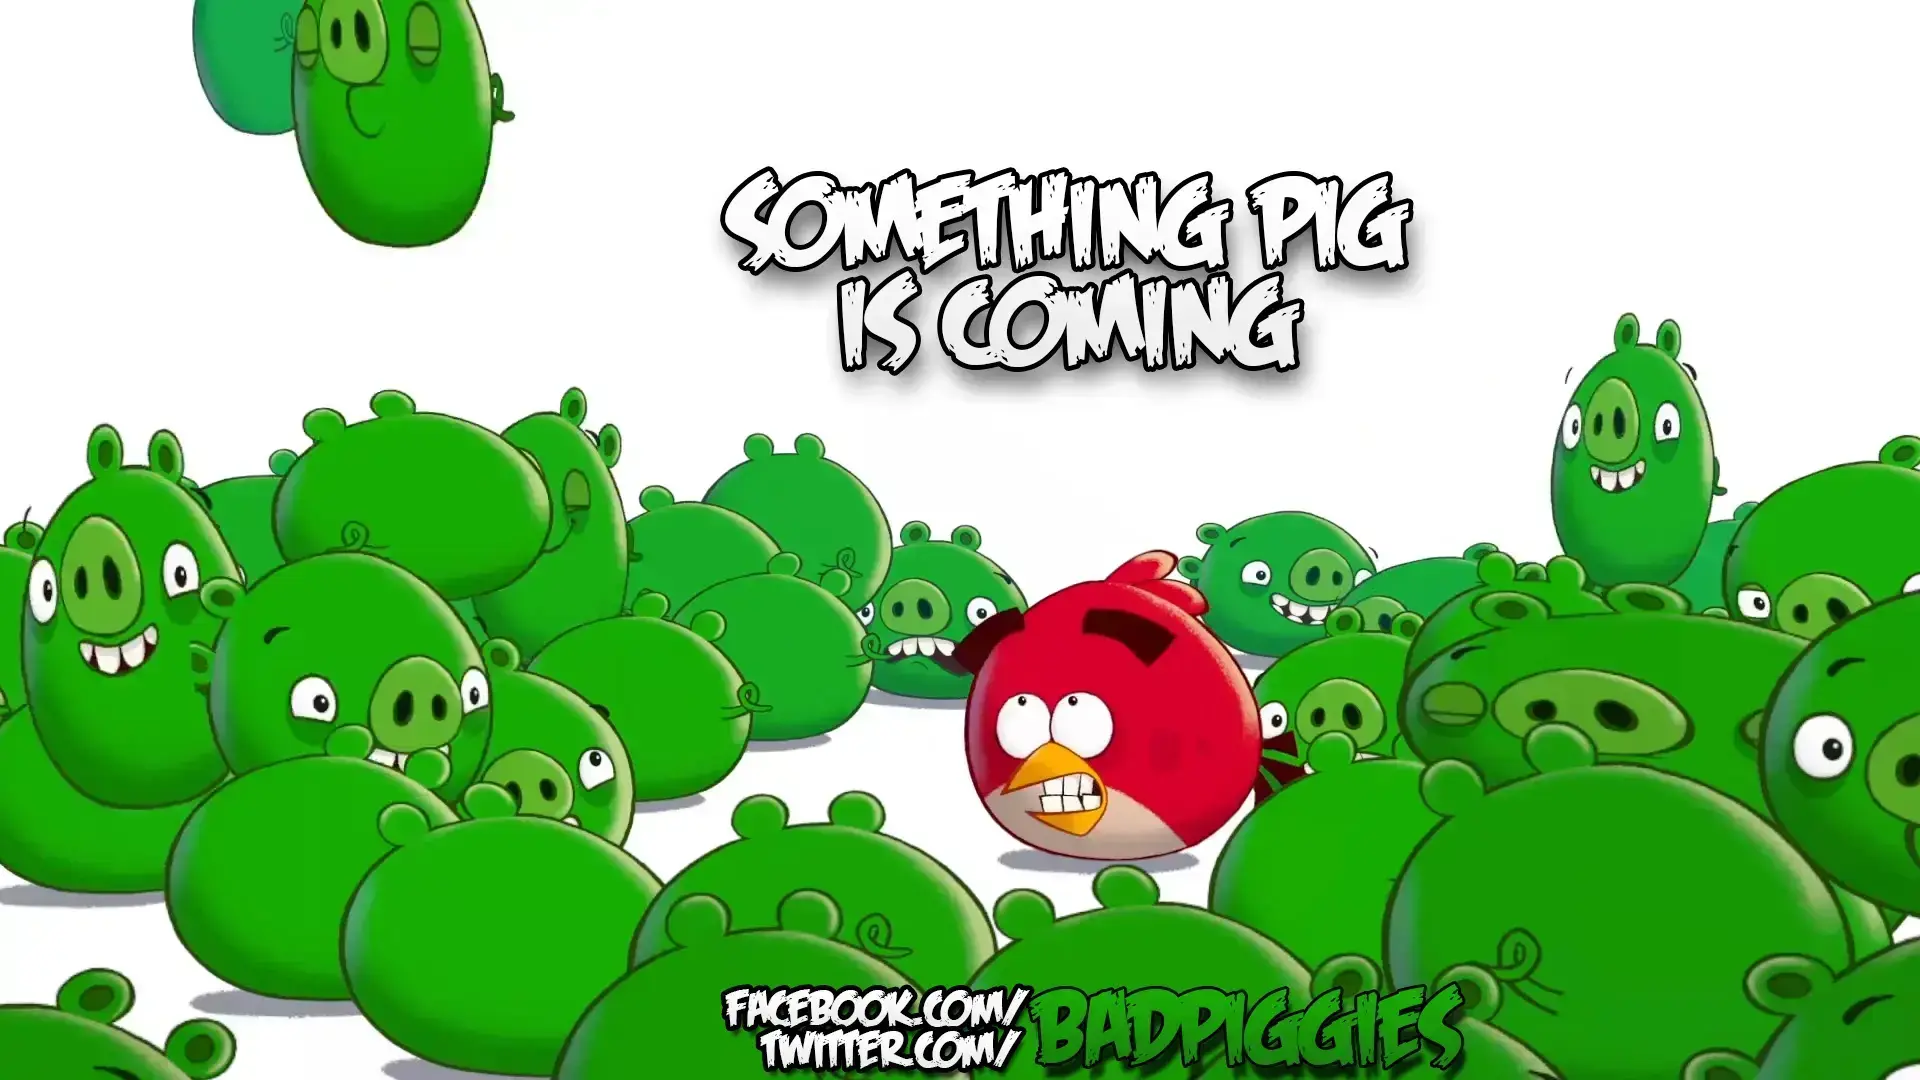 Game Bad Piggies wallpaper 3 | Background Image